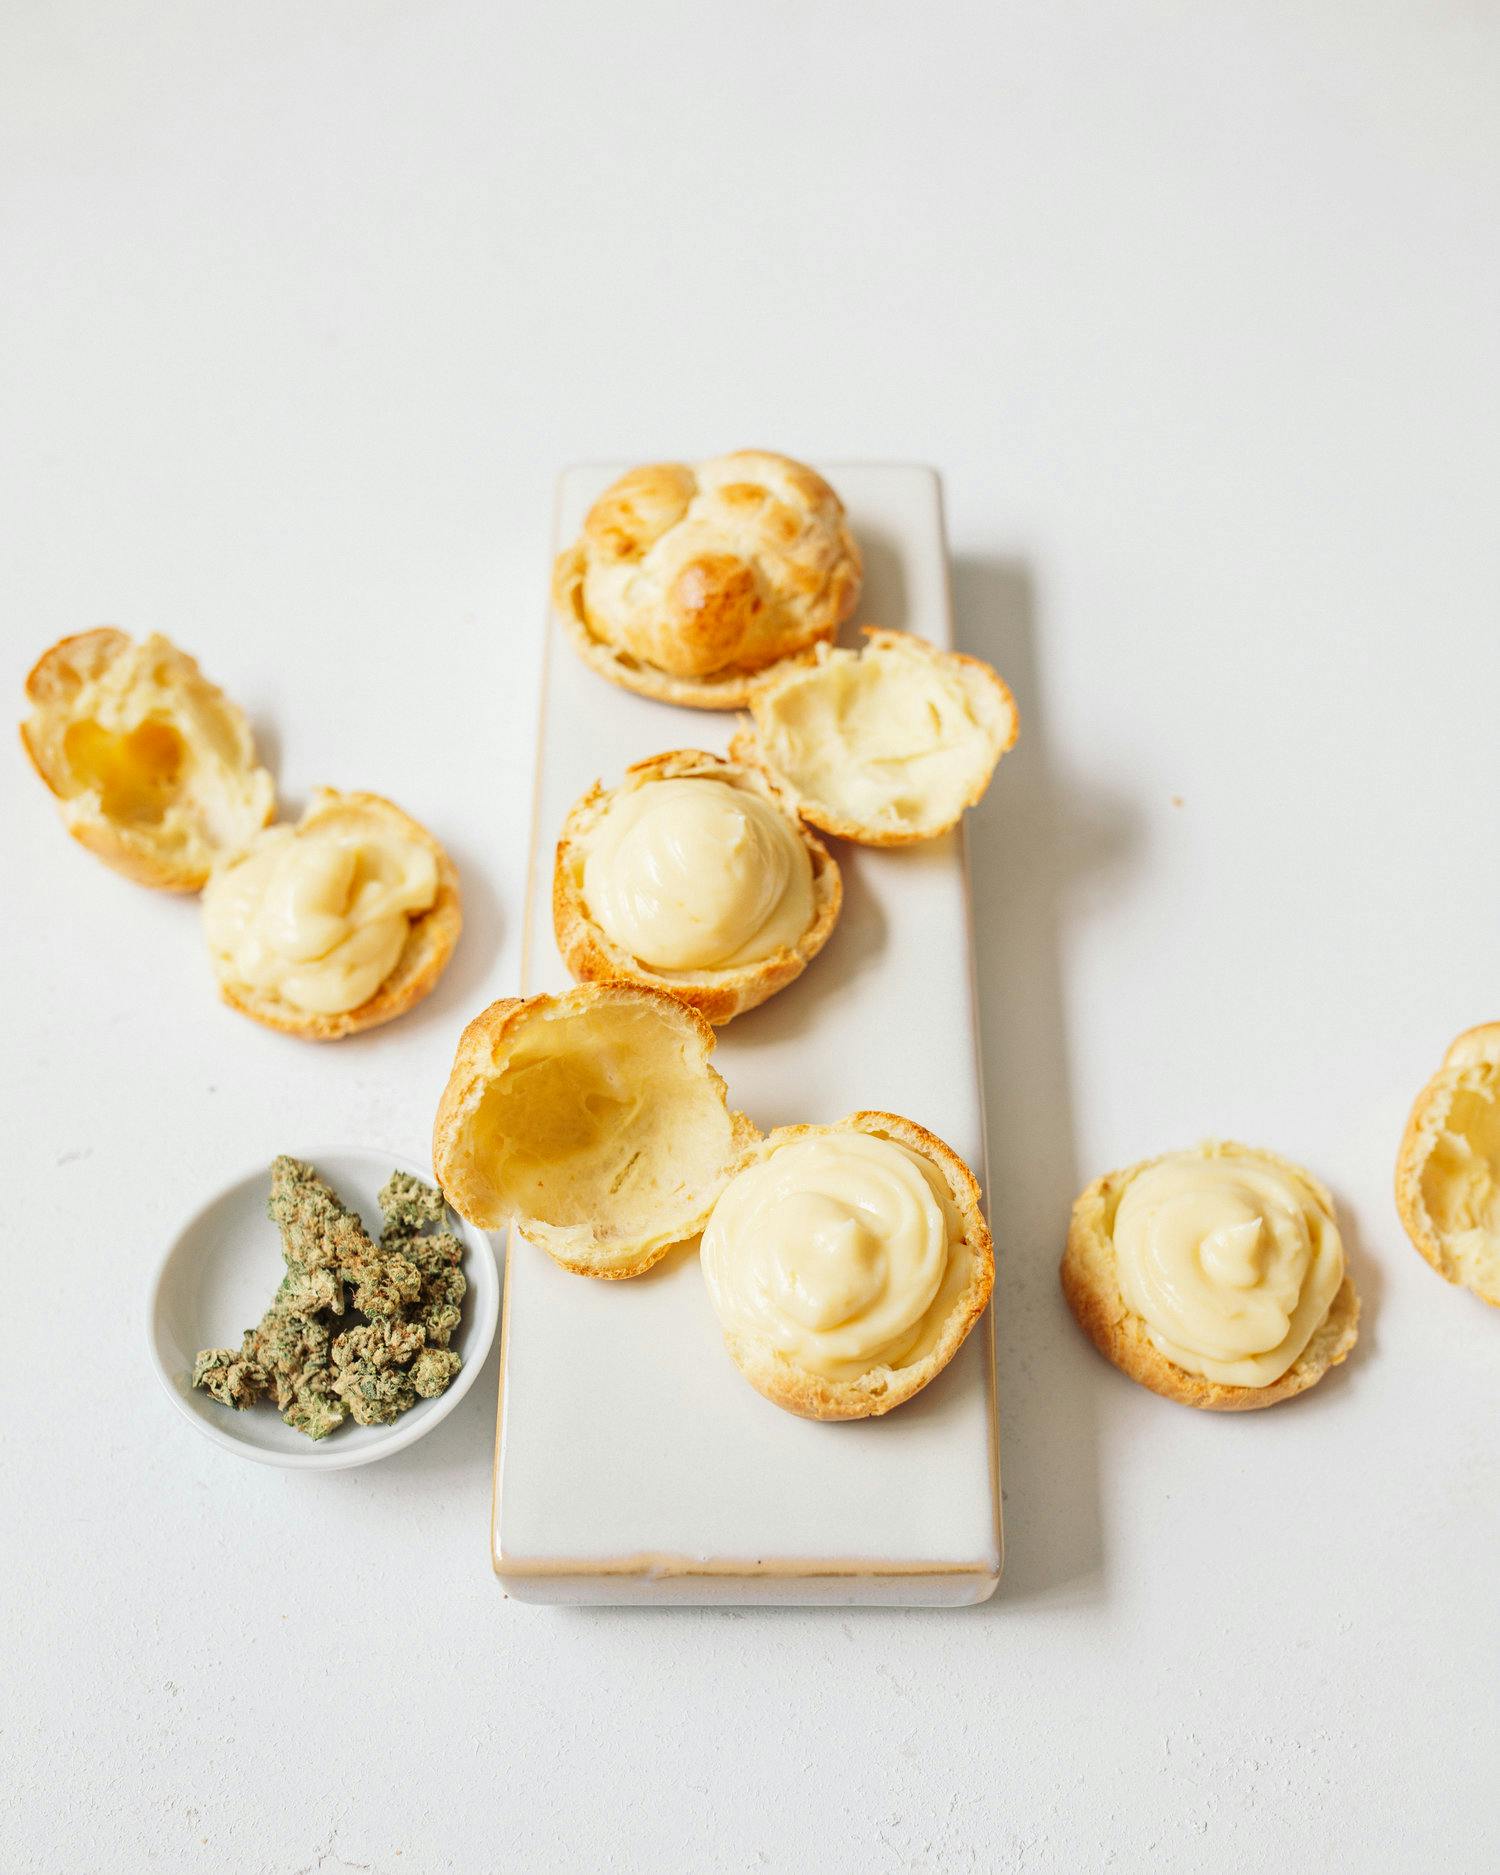 Cannabis lemon verbena pastry cream filling